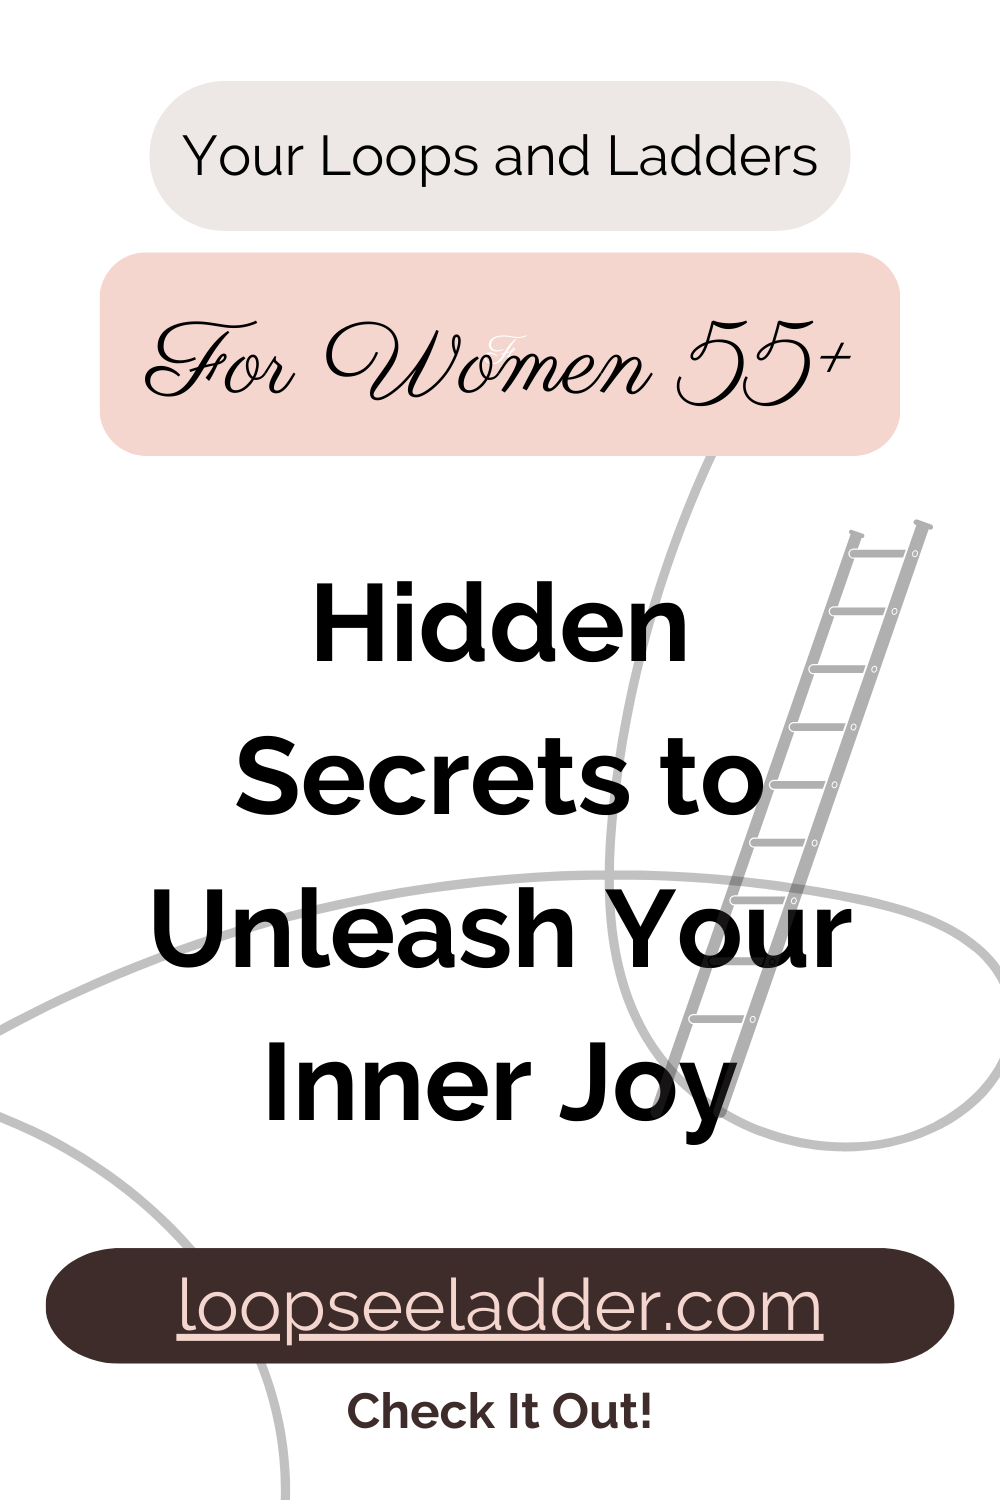 The Hidden Secrets to Unleash Your Inner Joy at 55+